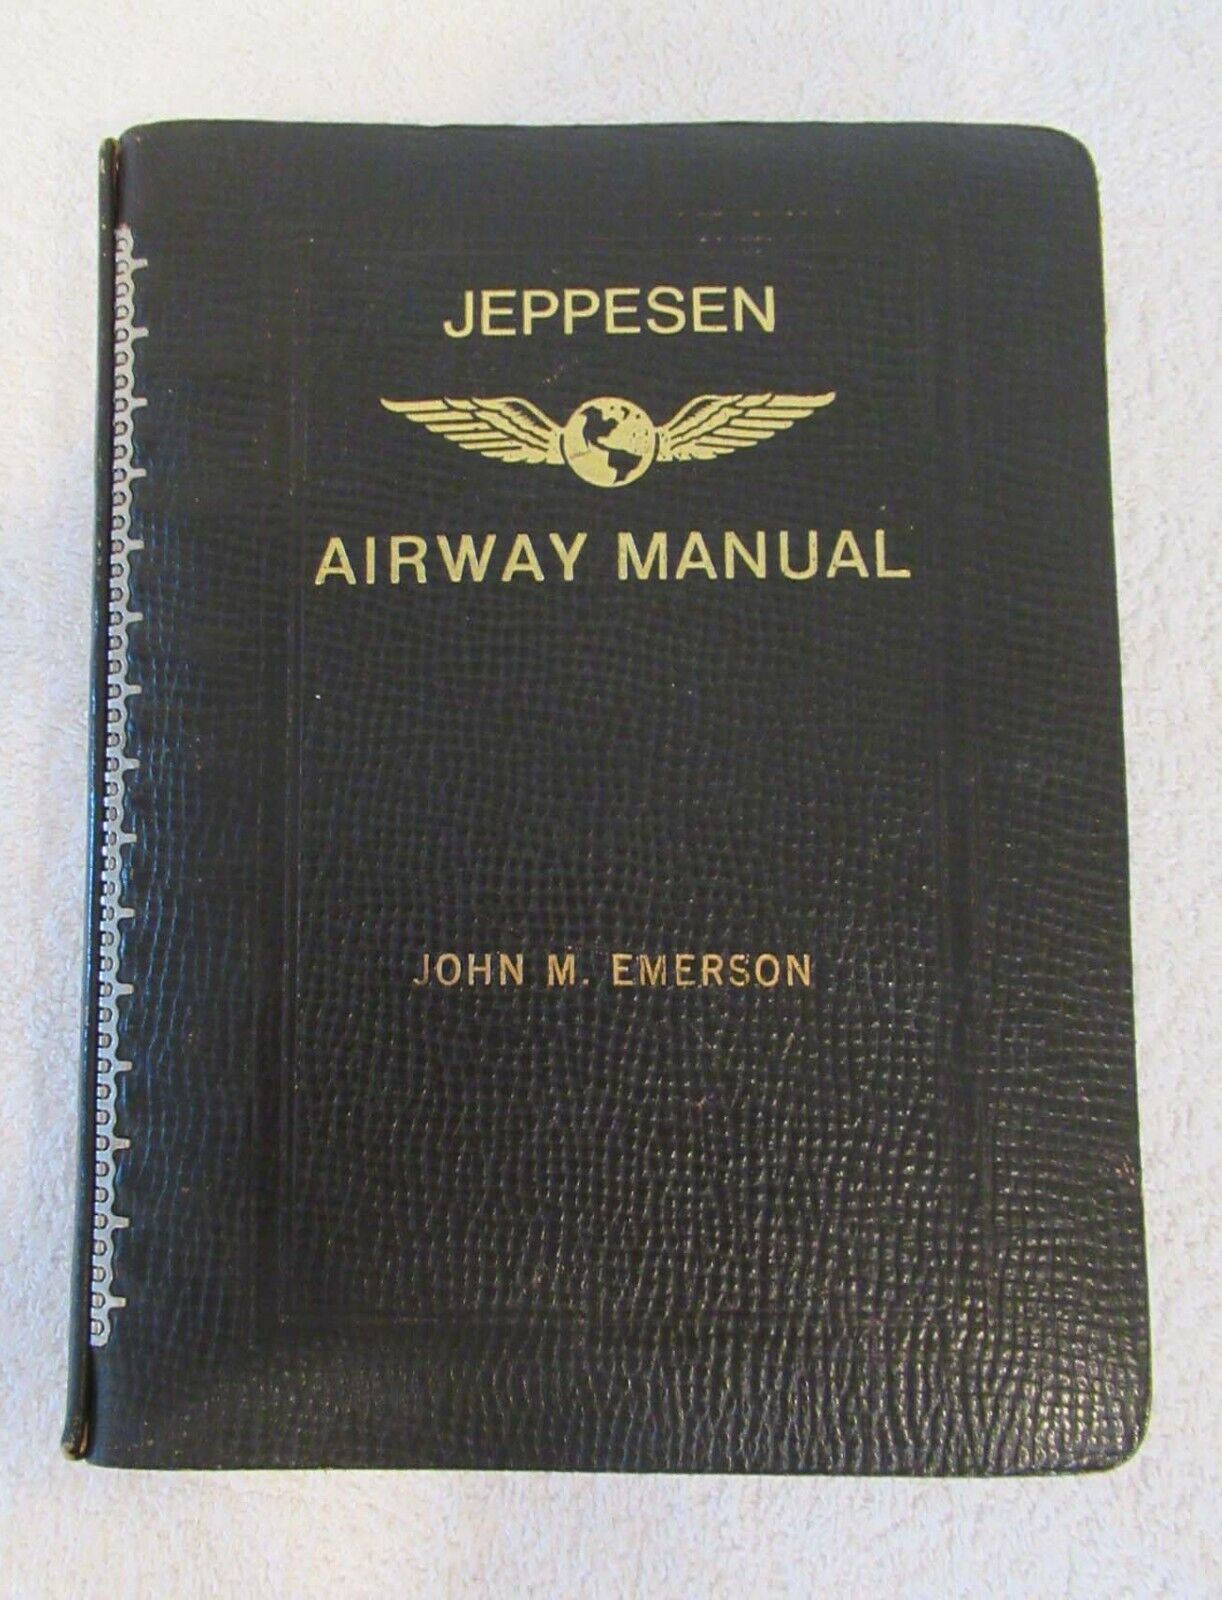 Jeppesen airway manuals (set of 3) - 1990s